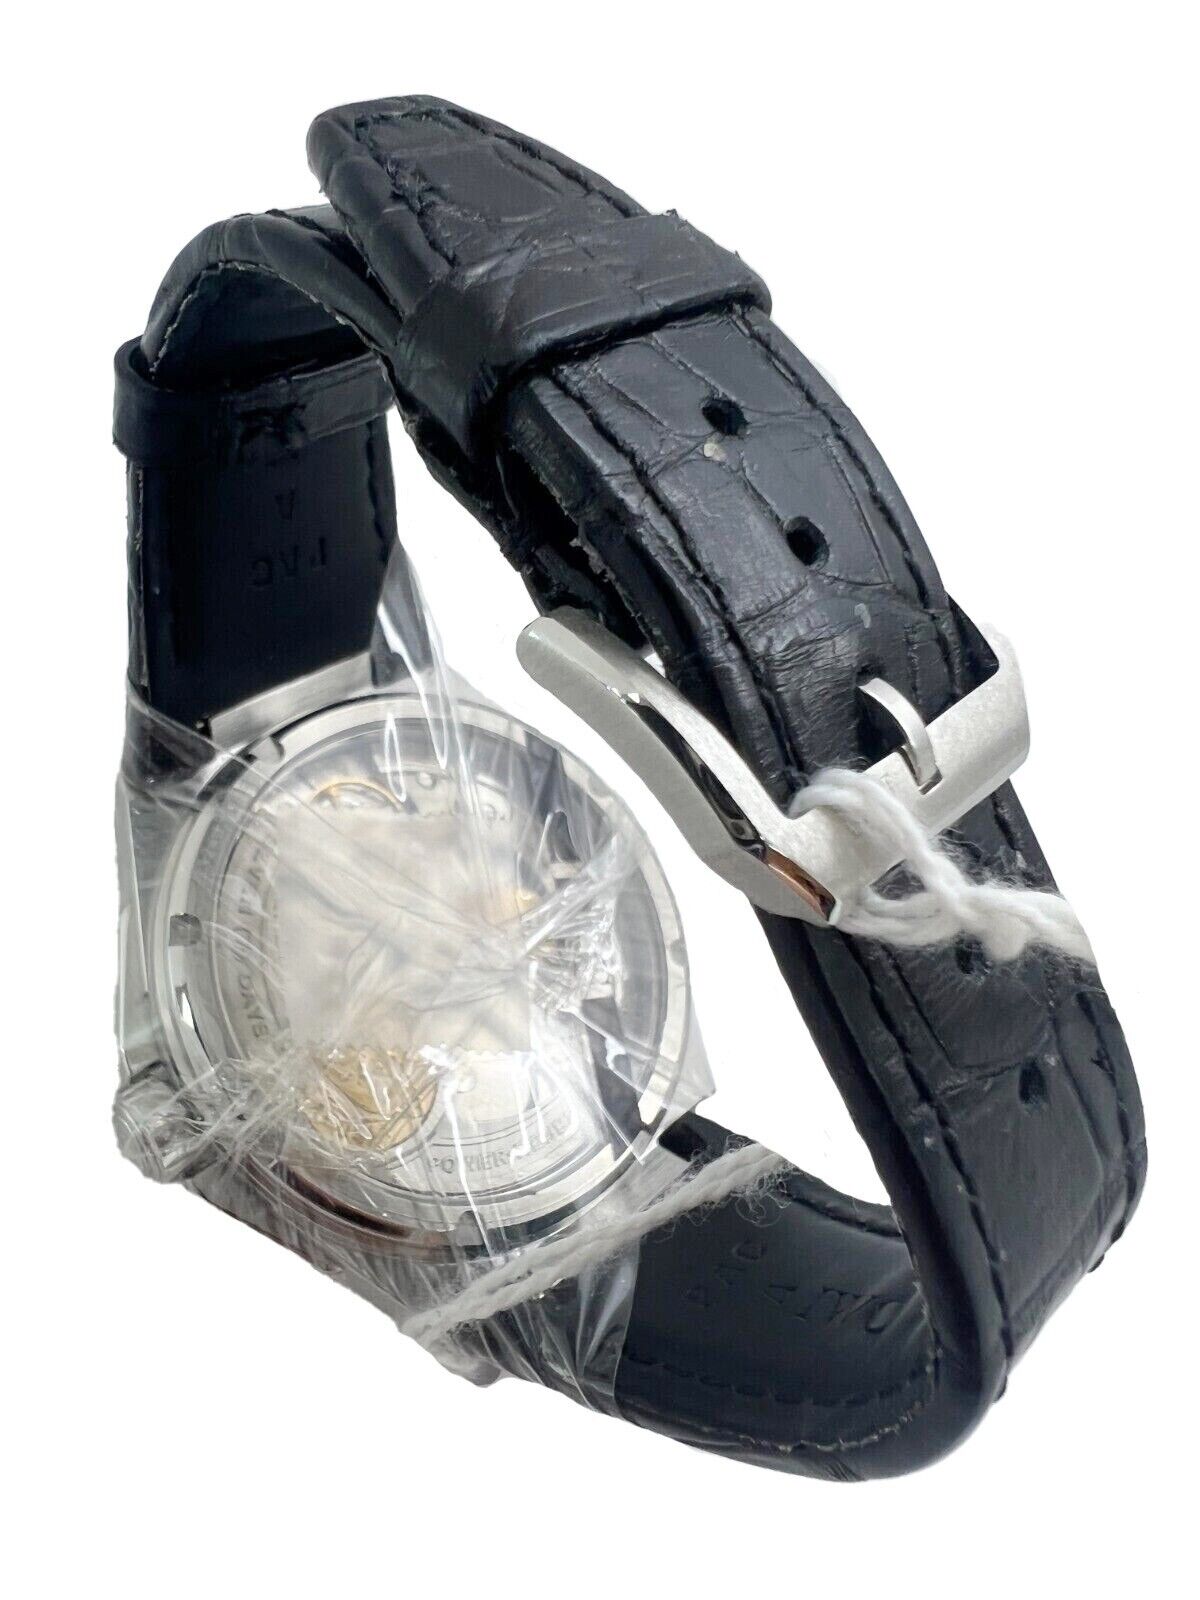 IWC Pilot's Watch Men's Black Watch - IW500401